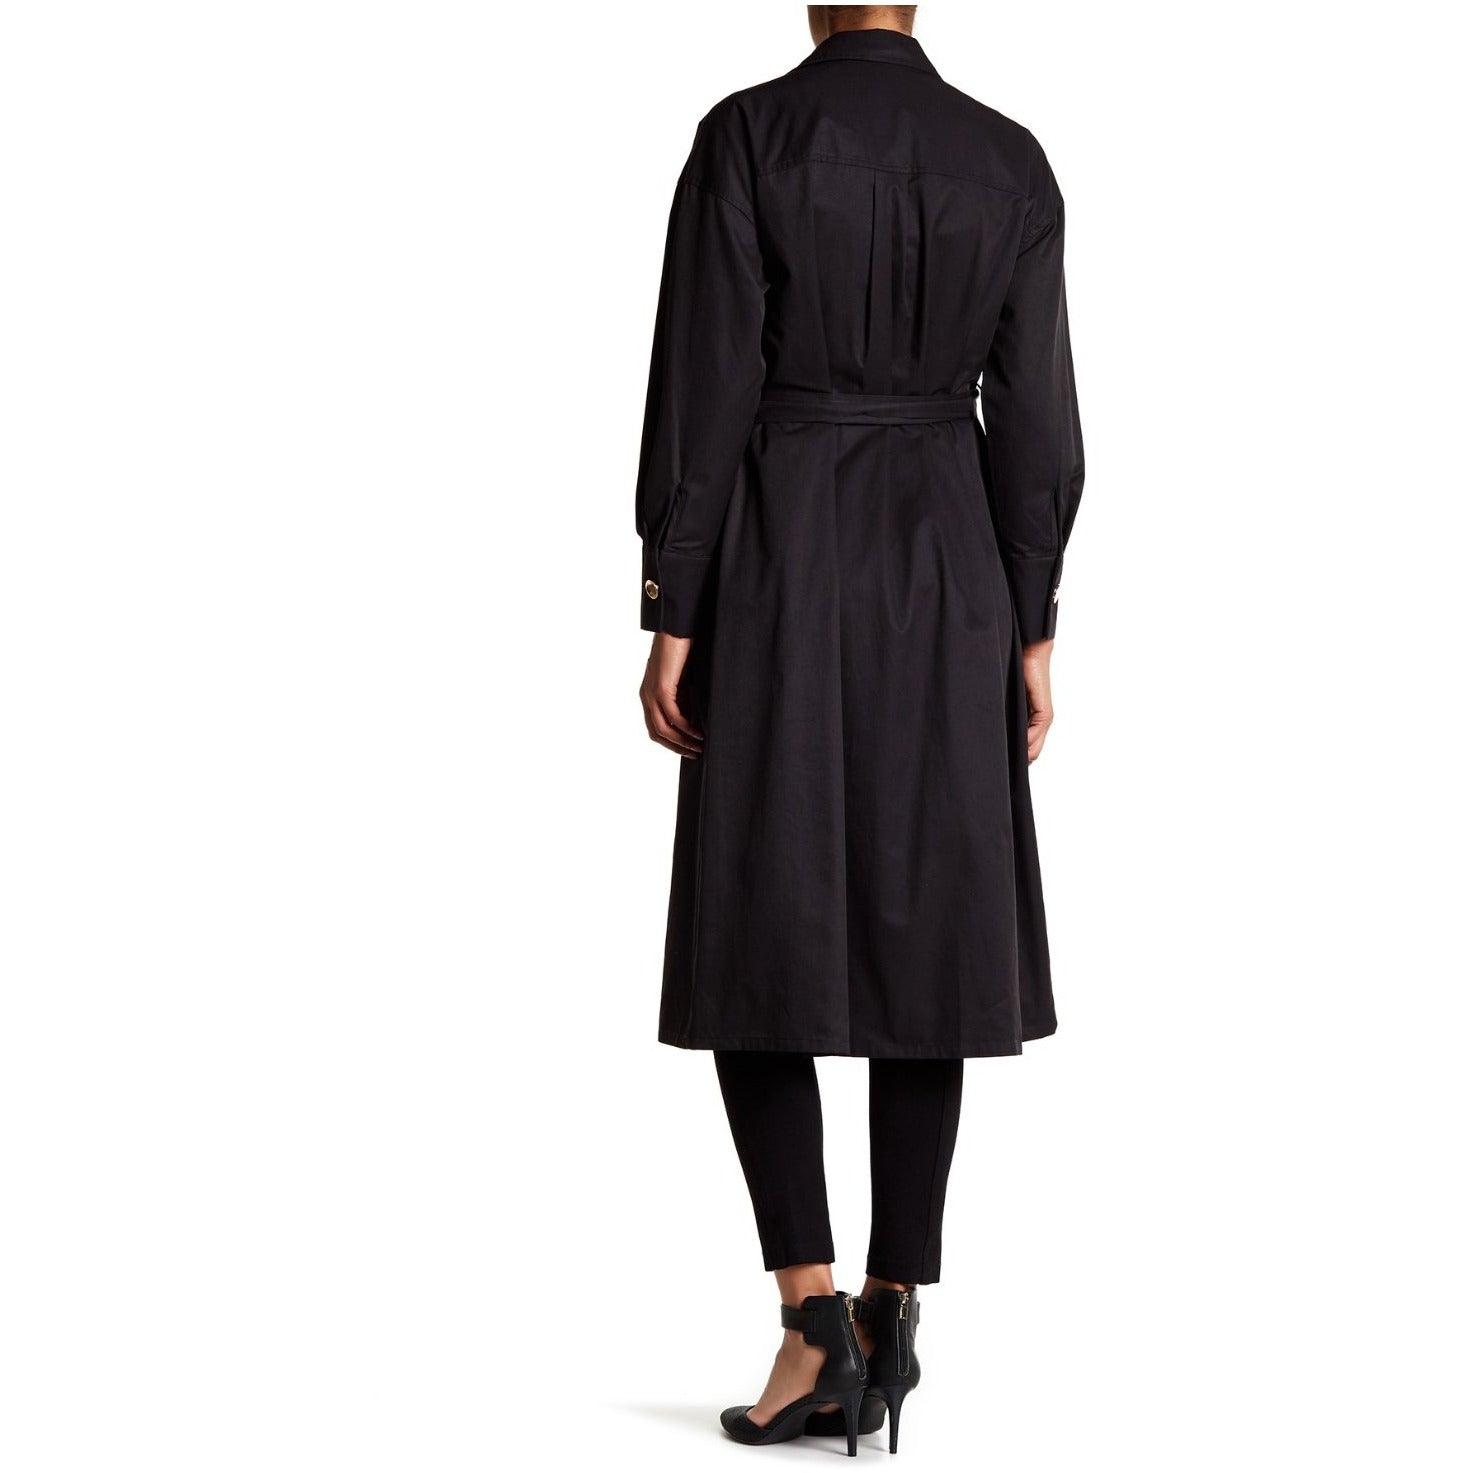 4 Pocket Columbo Style Ladies Trench Coat (Black) - Ariya's Apparel